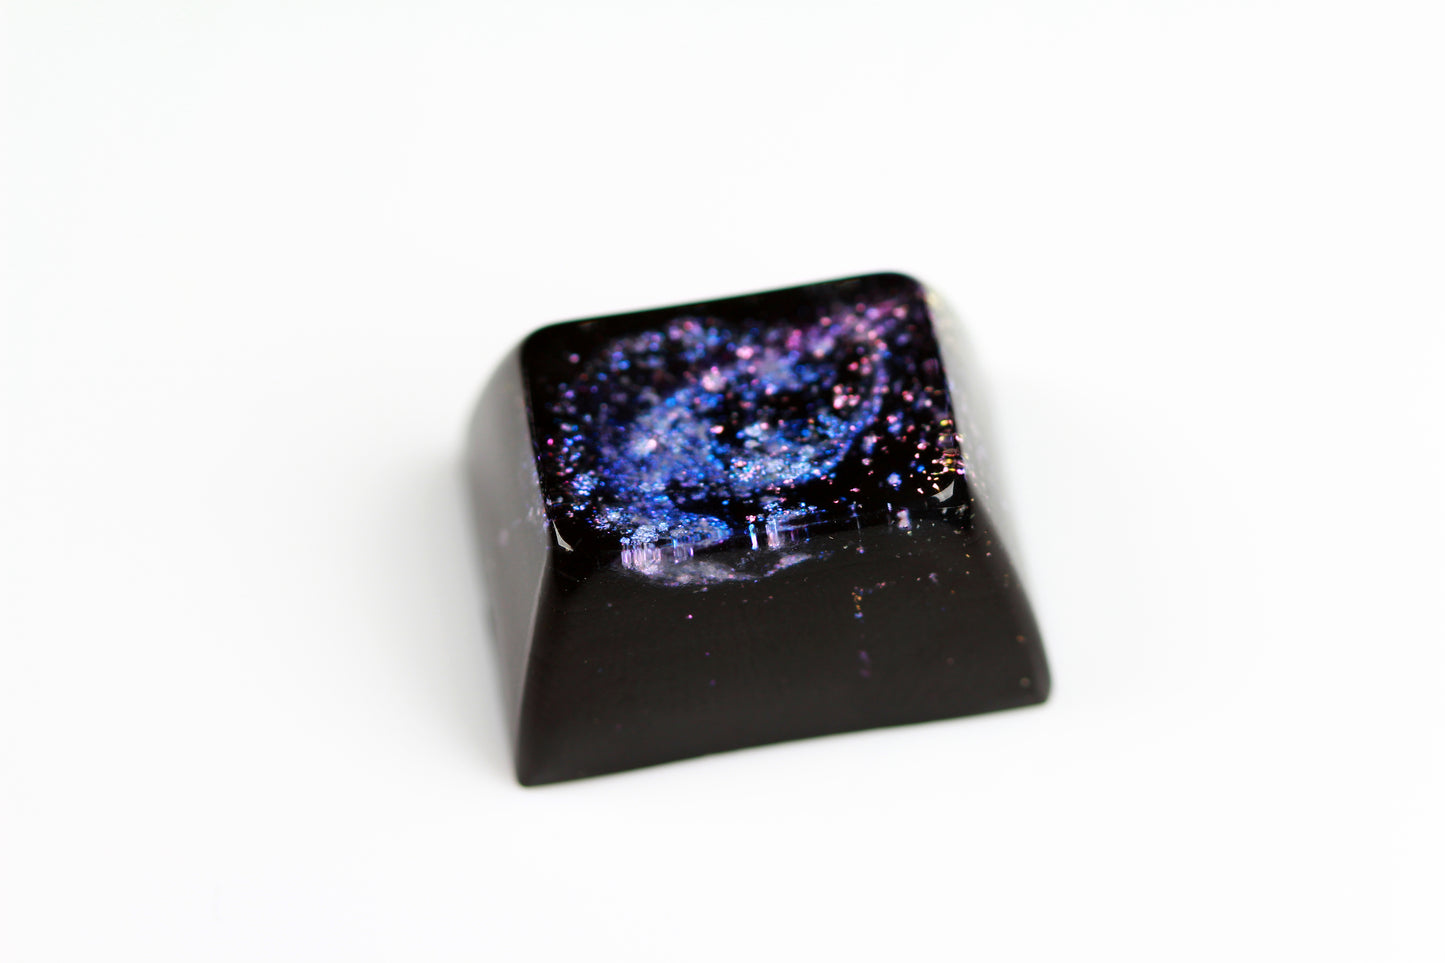 Gimpy SA Row 3, 1.25u - Deep Field Opal Nebula - PrimeCaps Keycap - Blank and Sculpted Artisan Keycaps for cherry MX mechanical keyboards 